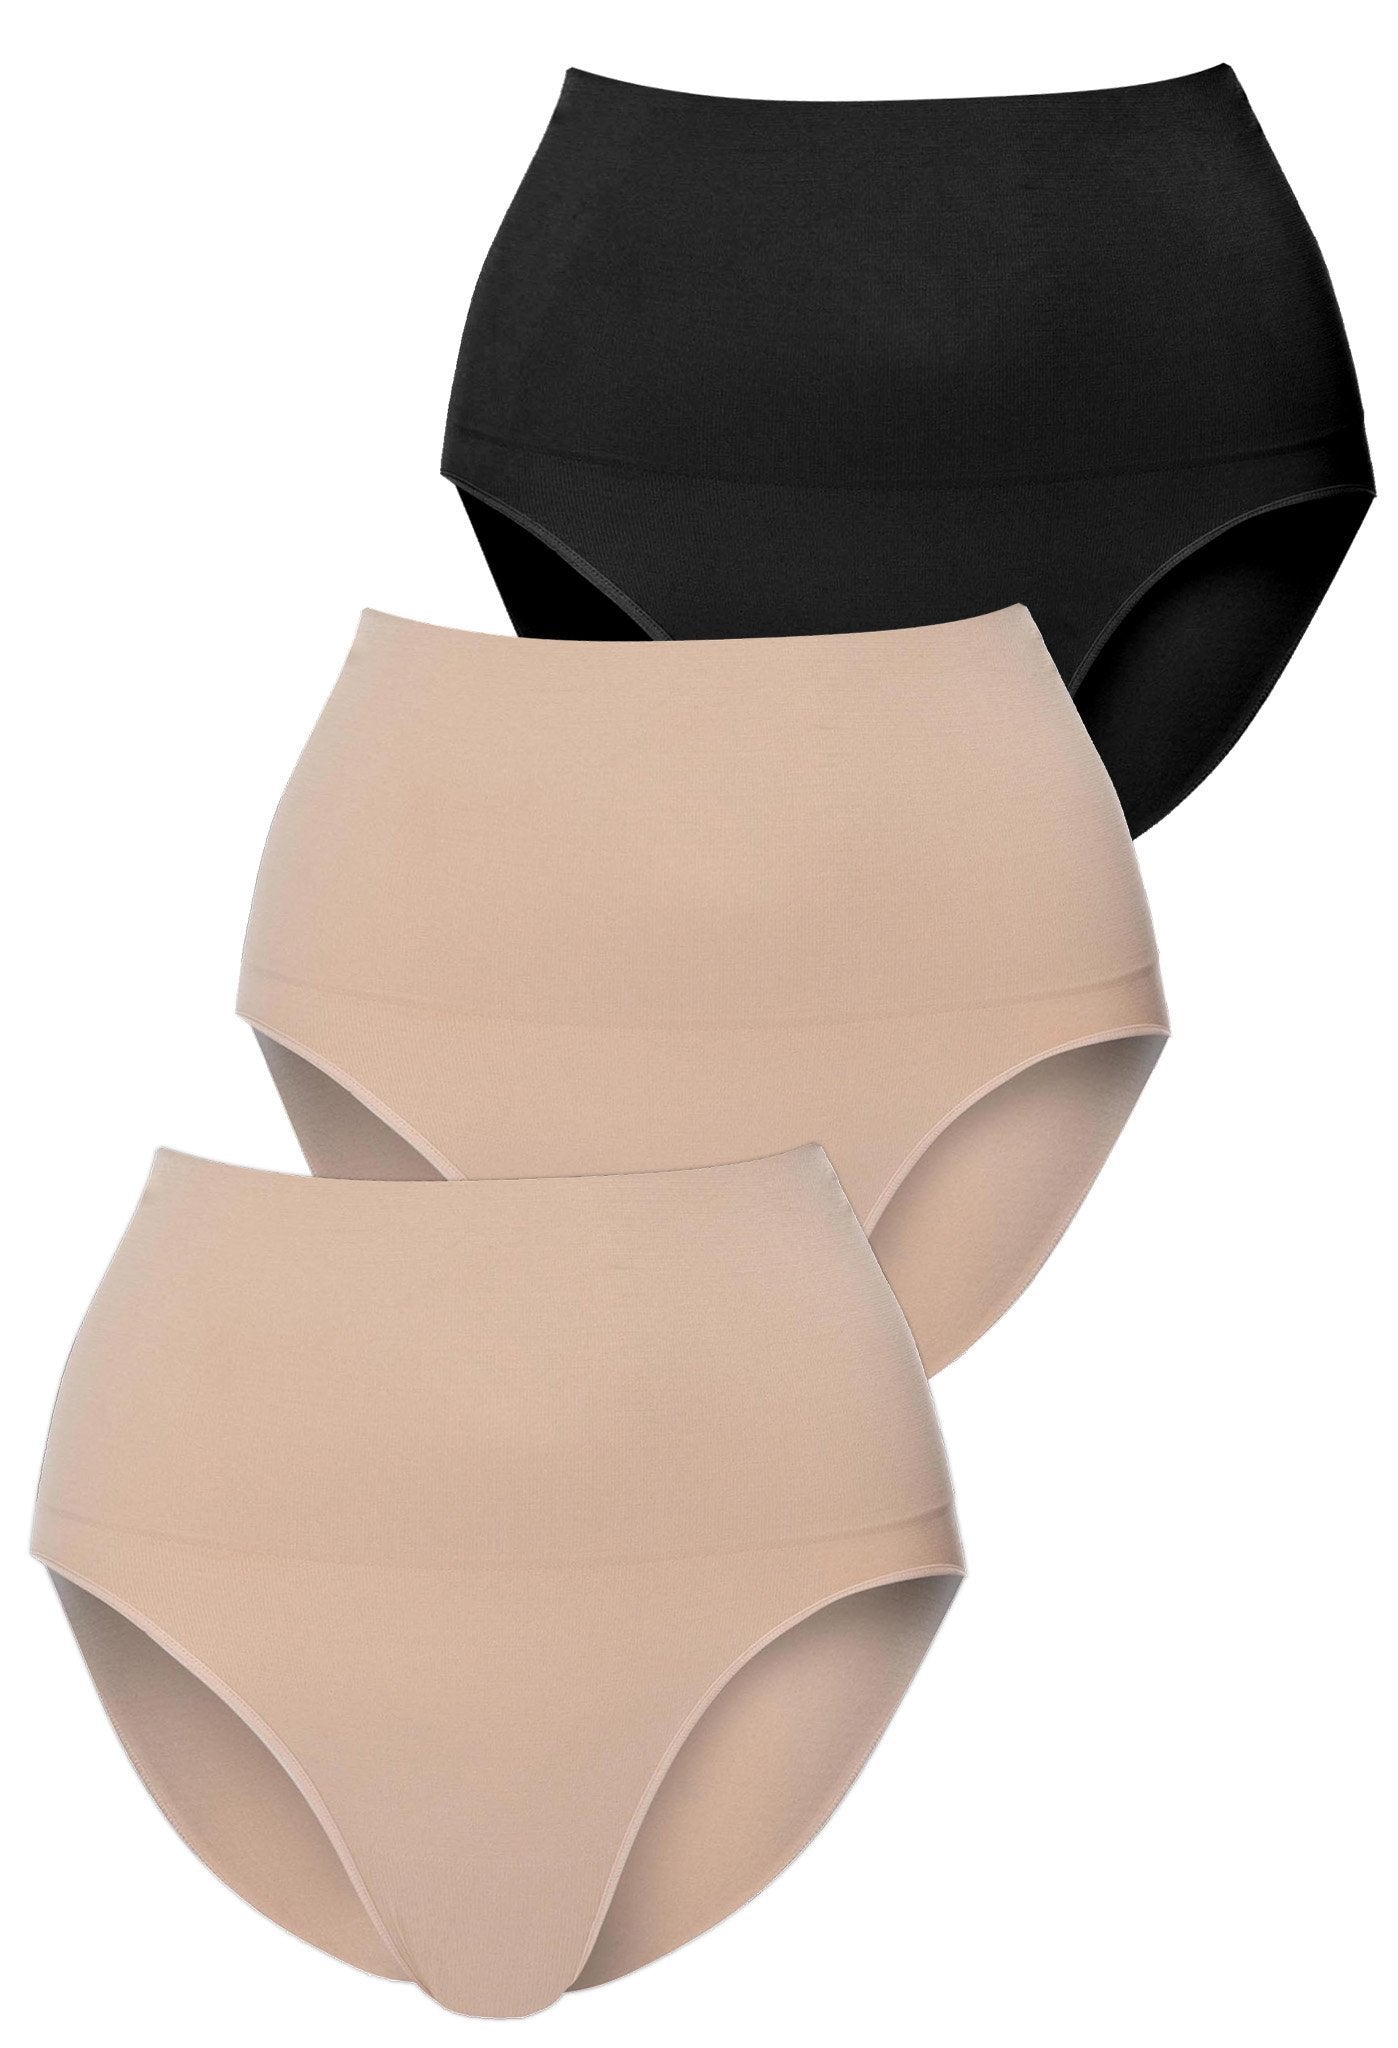 Belvia Comfia Tummy Control Shaping Briefs Black/nude 2pack